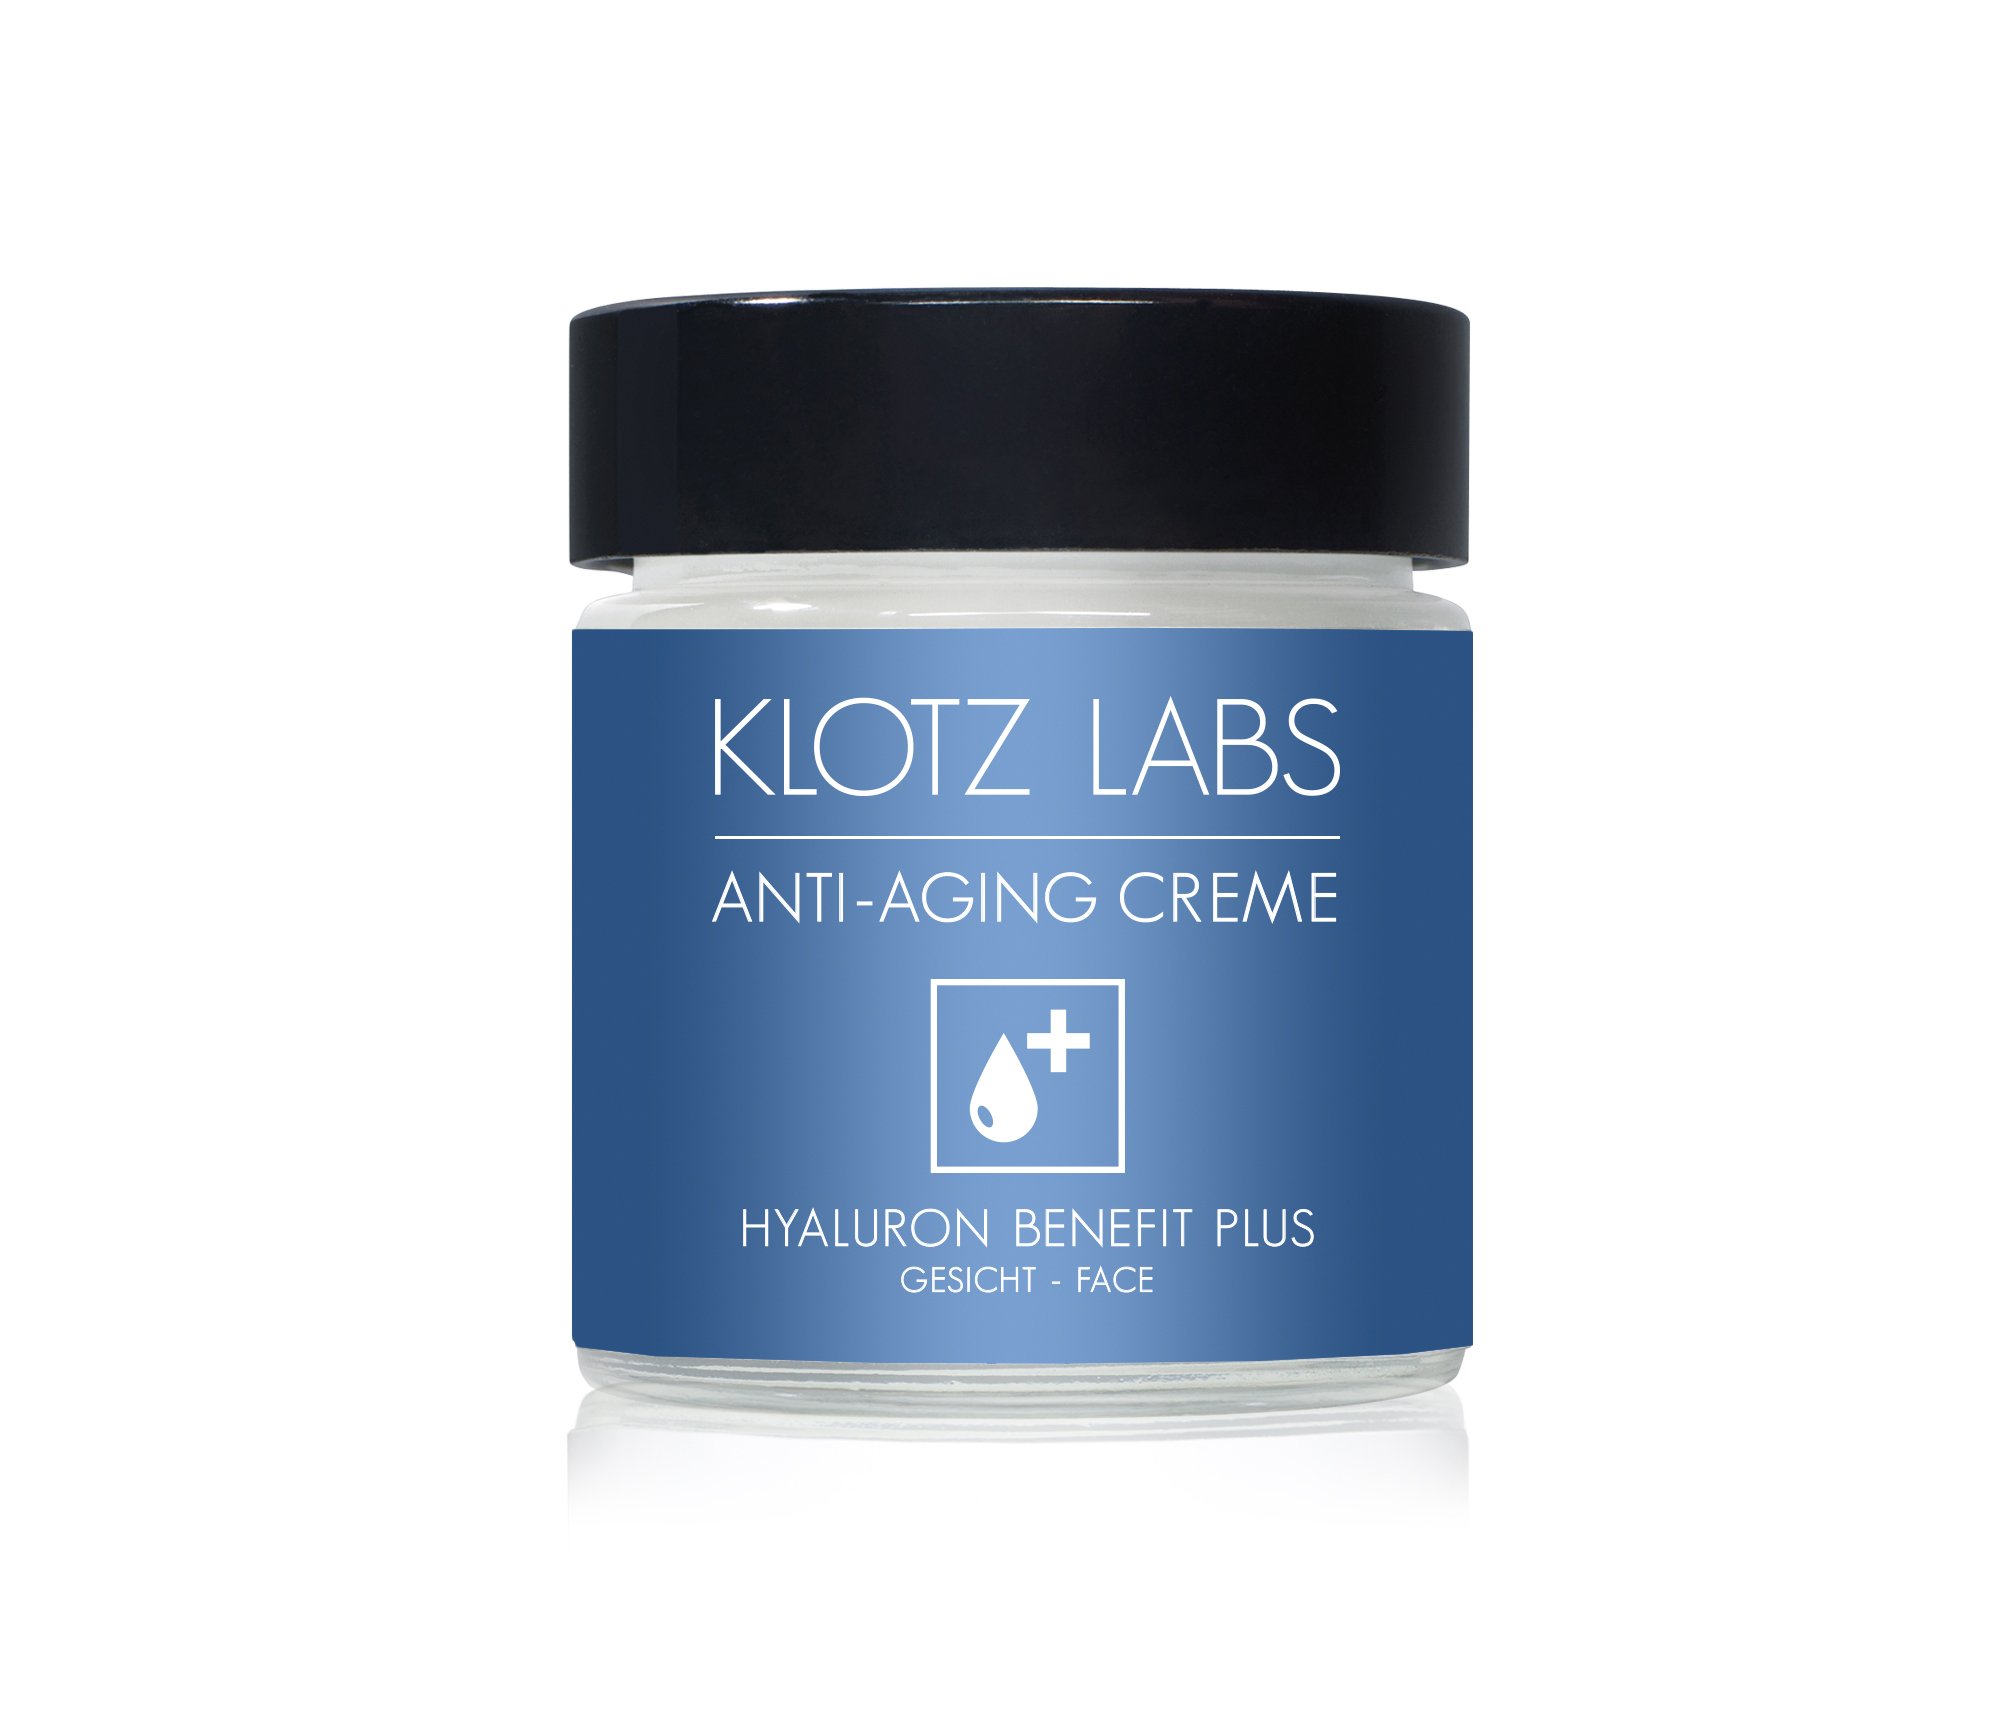 Klotz Labs Hyaluron Benefit Plus Anti-Aging Creme, 1er Pack (1 x 60 ml)